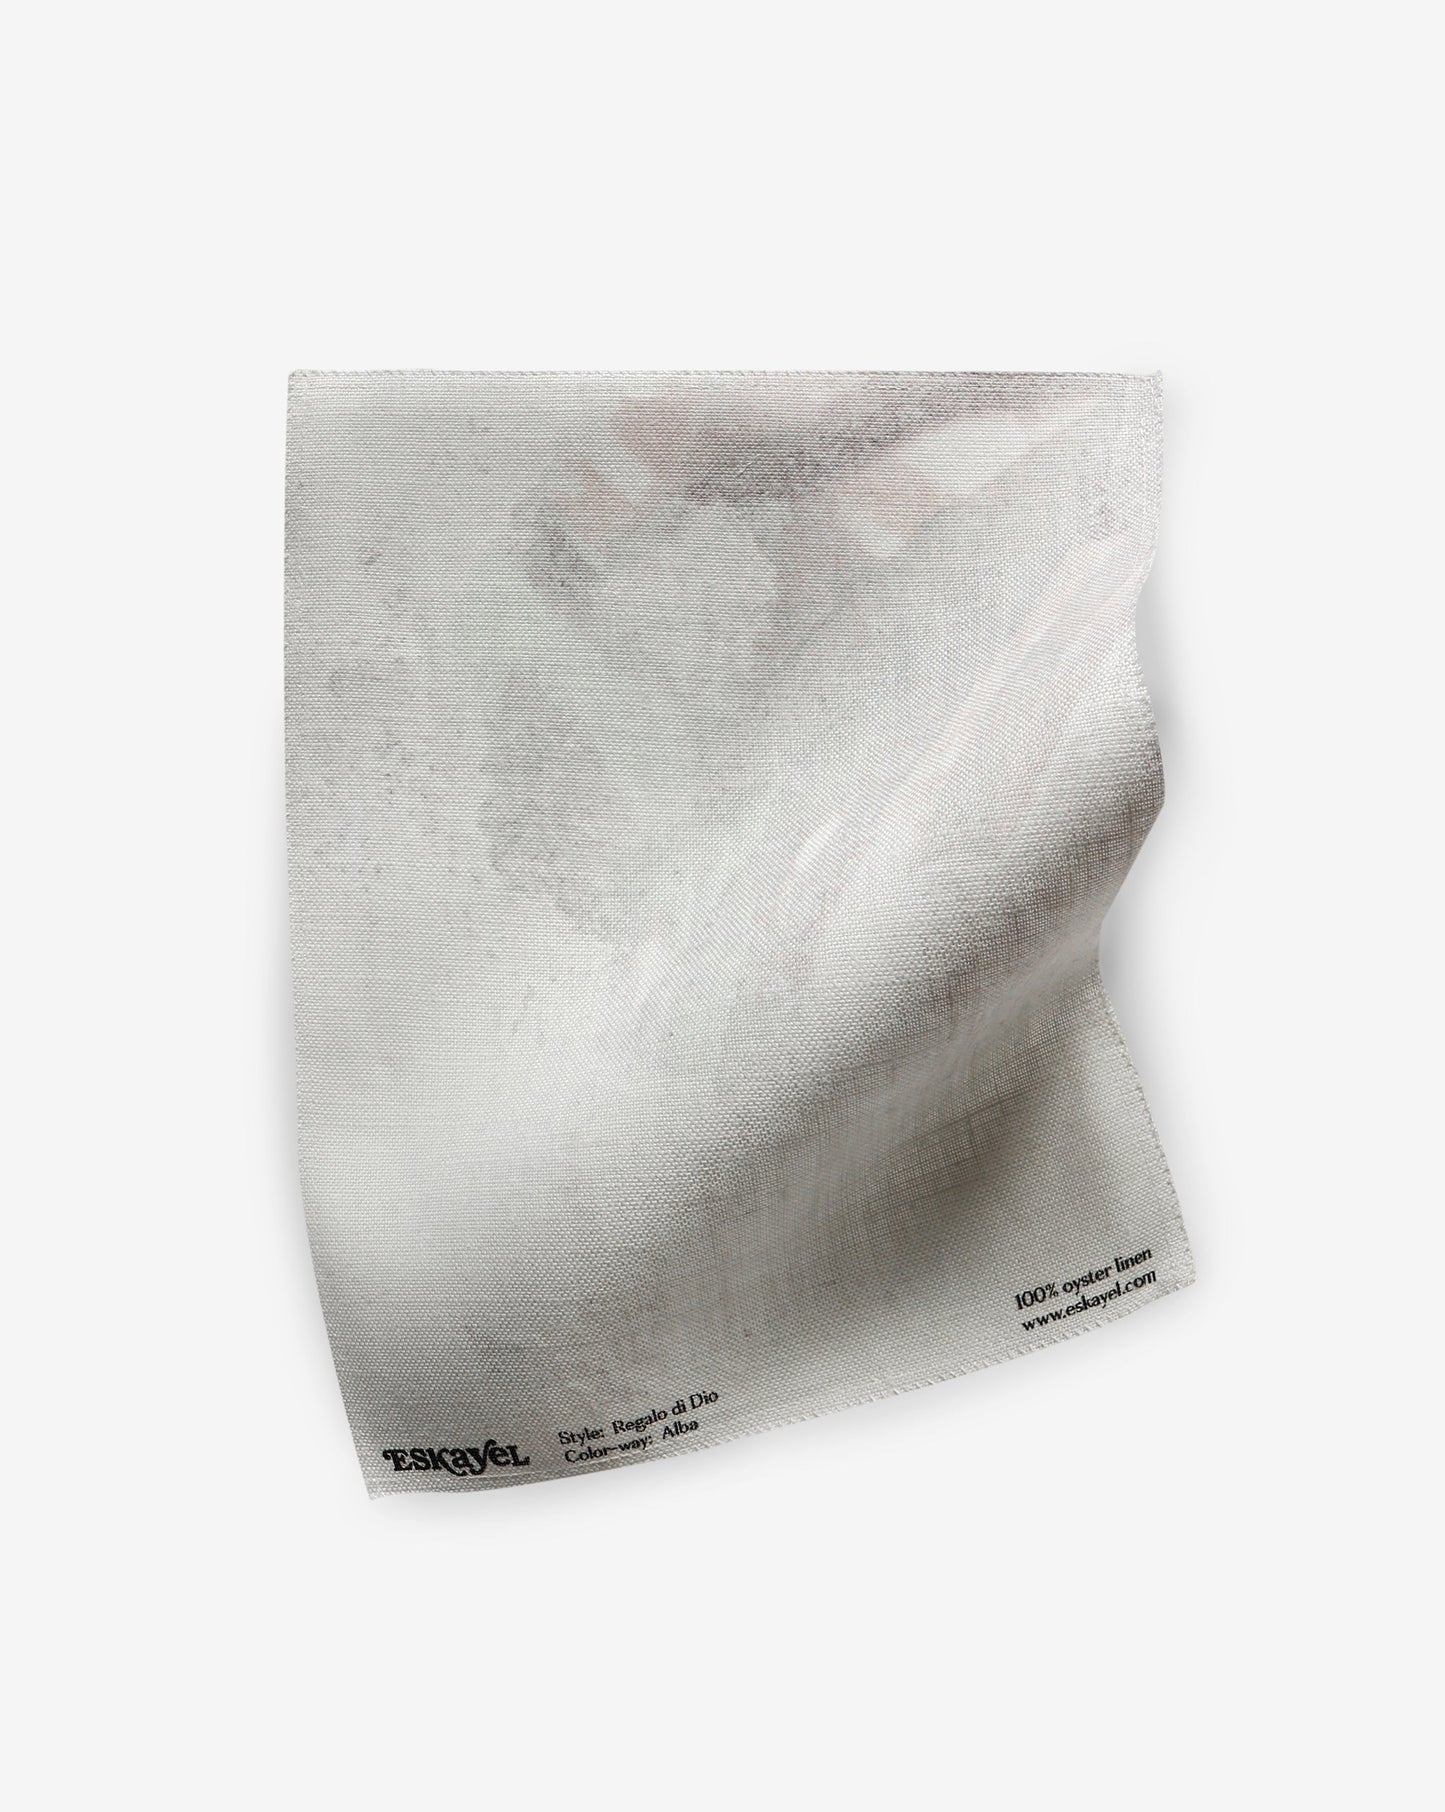 A Regalo di Dio Fabric Sample Alba piece of fabric on a white surface